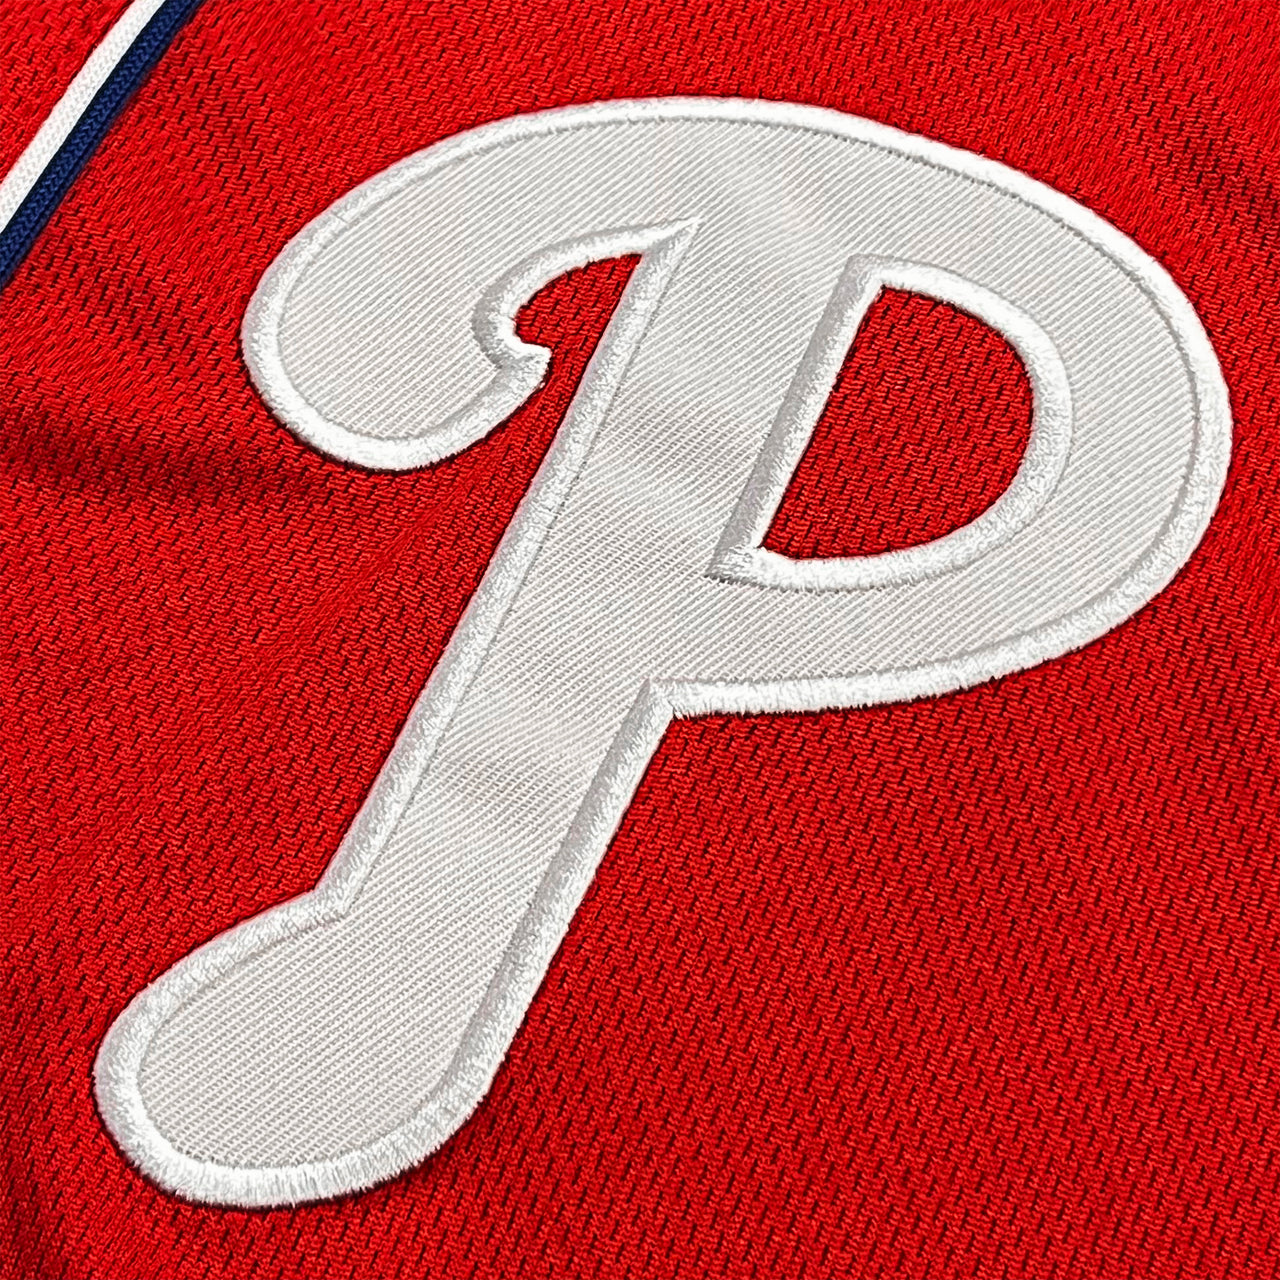 Rhys Hoskins Philadelphia Phillies Powder Blue Baseball Jersey - Dynasty  Sports & Framing